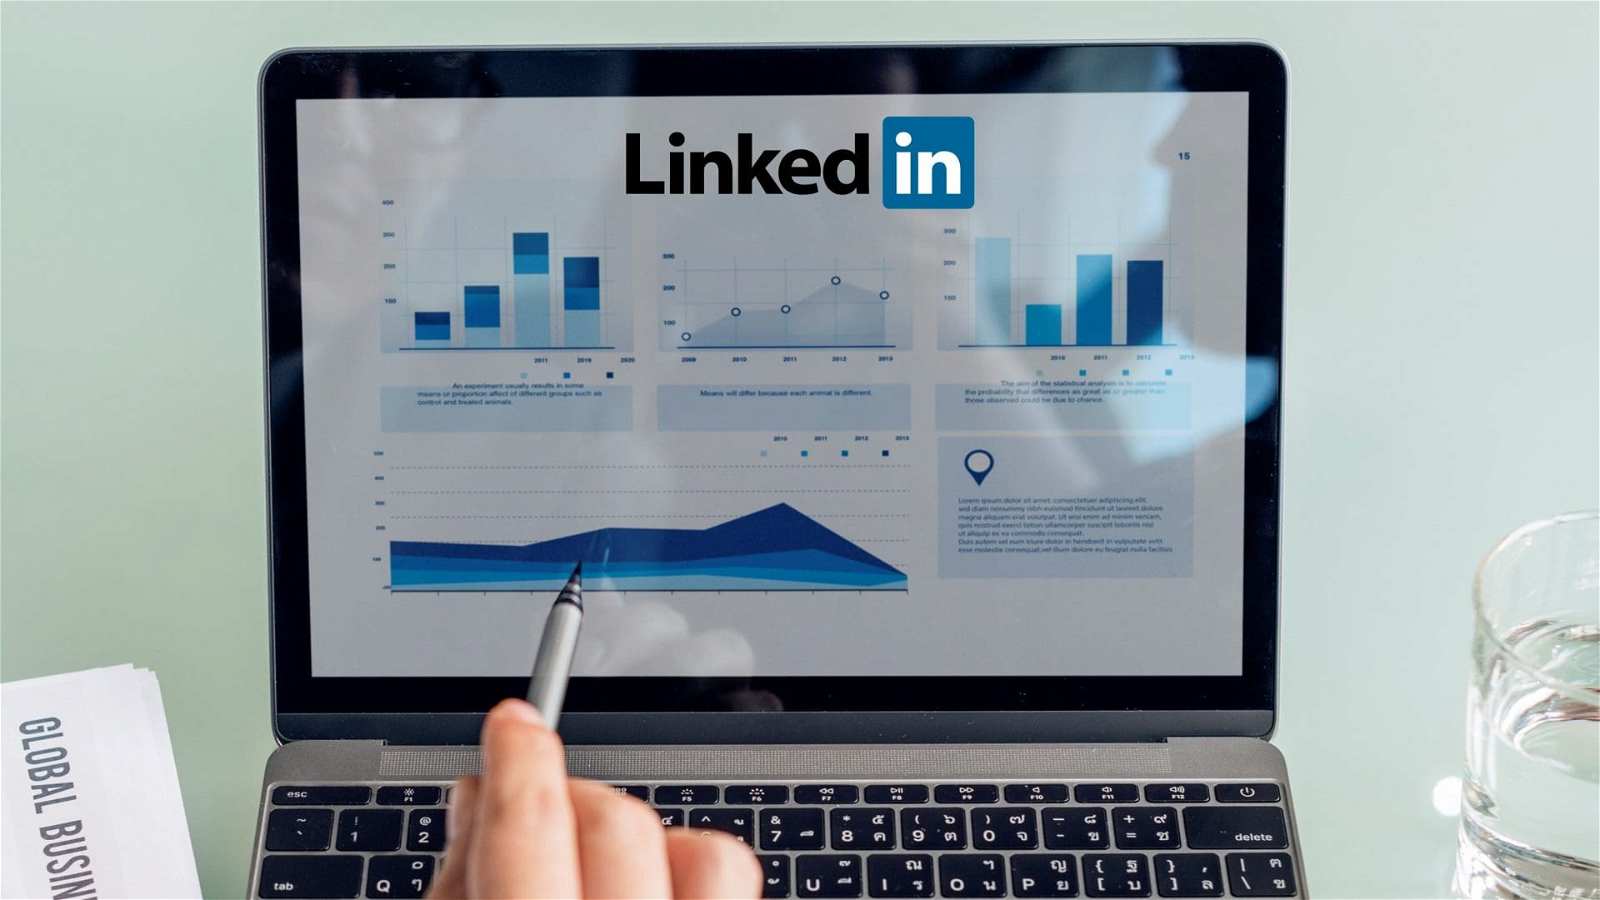 LinkedIn: 2019 figures for the B2B social network